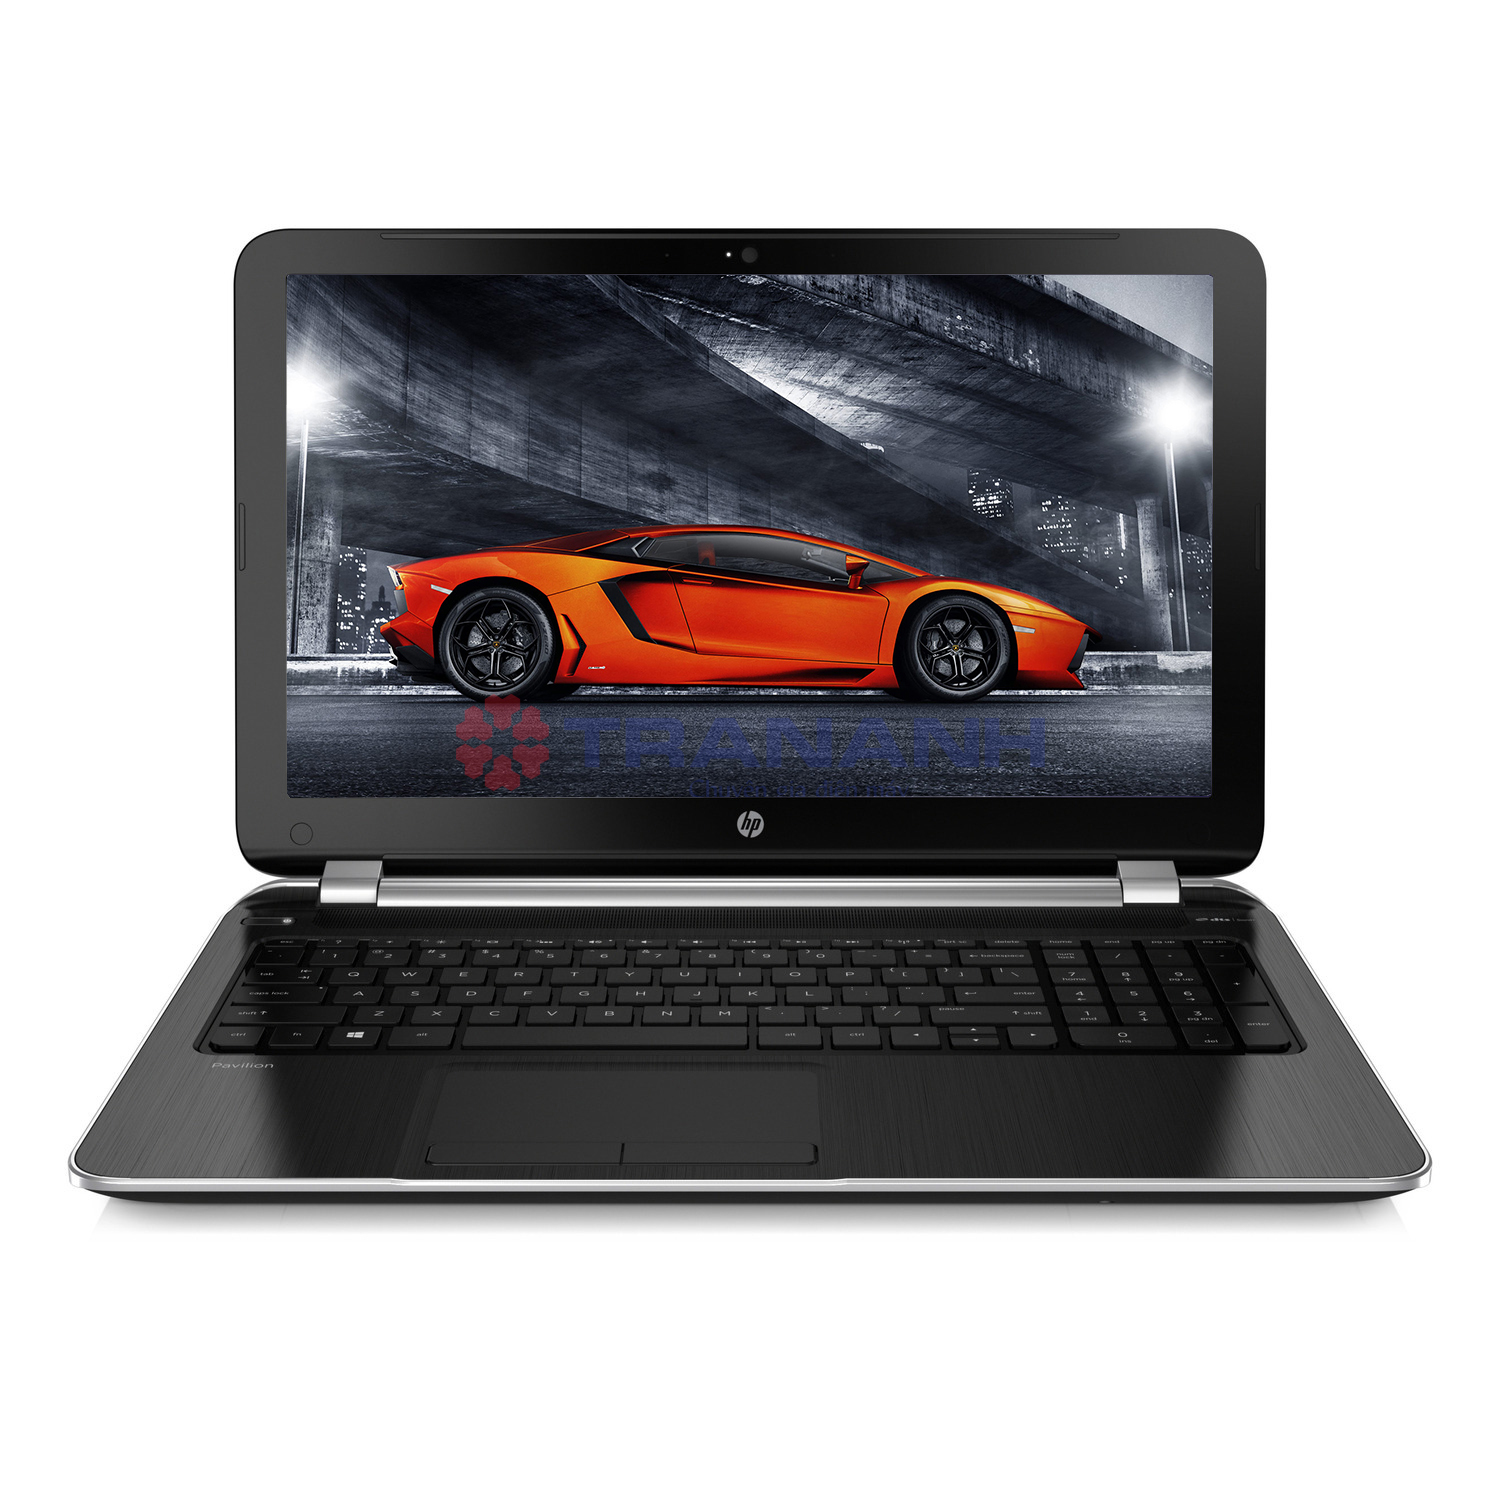 Laptop HP Pavilion Lean 15F3Z96PA - Intel Core i5-4200U, 1.6Ghz, Ram 4GB, 500GB HDD, Intel Nvidia Geforce GT740 -2GB